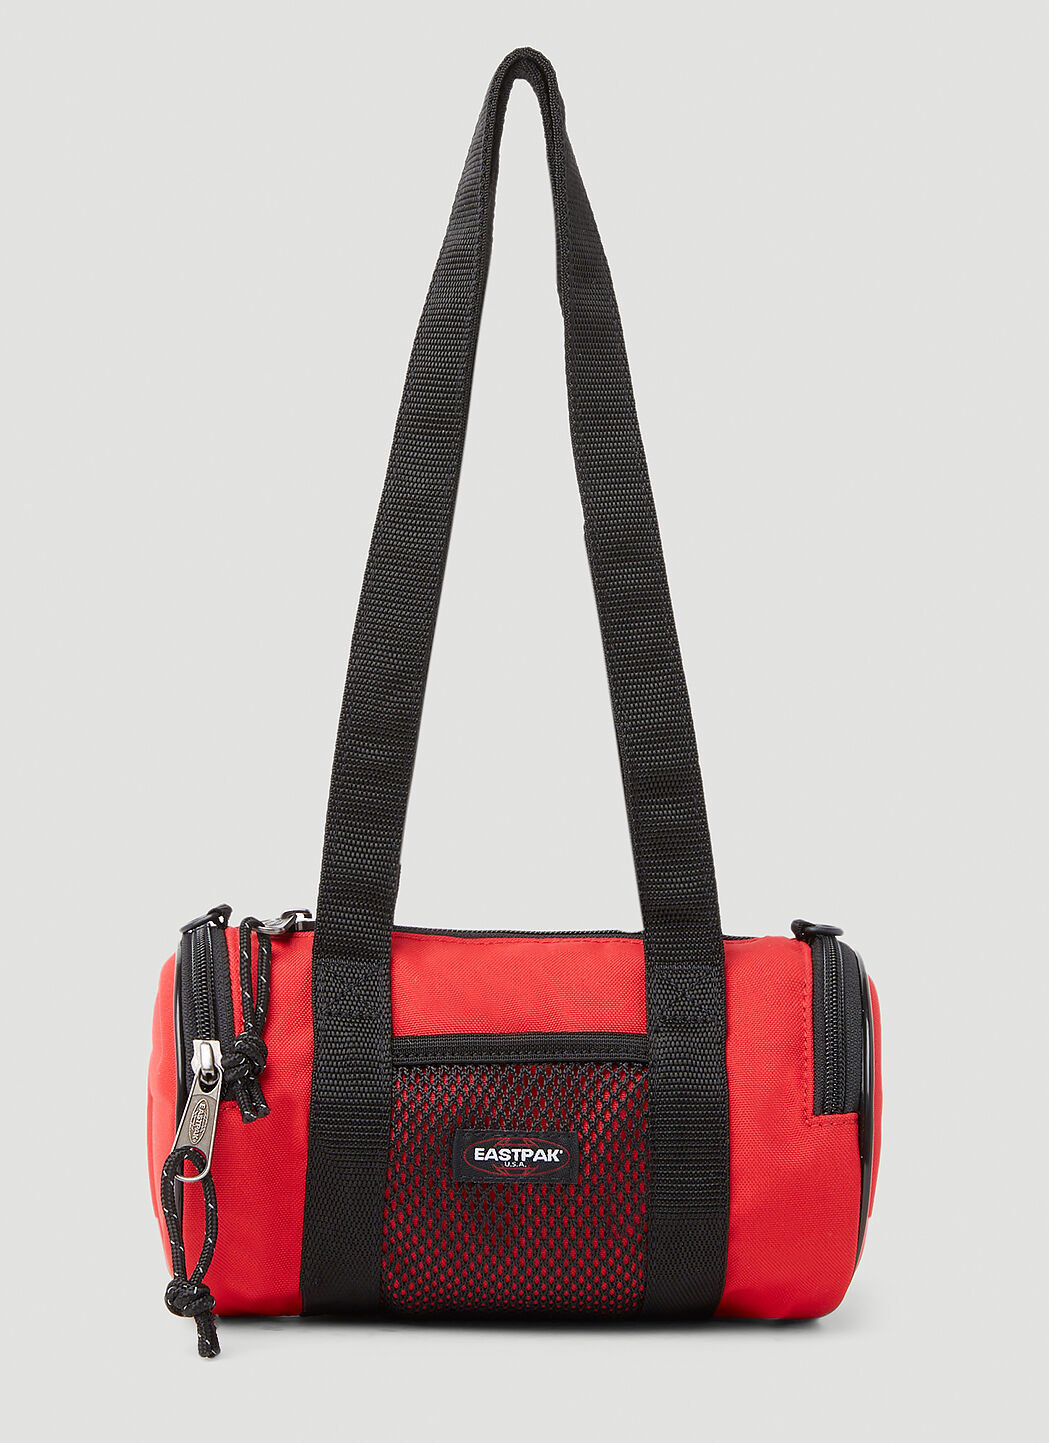 Eastpak x Telfar Small Duffle Shoulder Bag Black est0347001